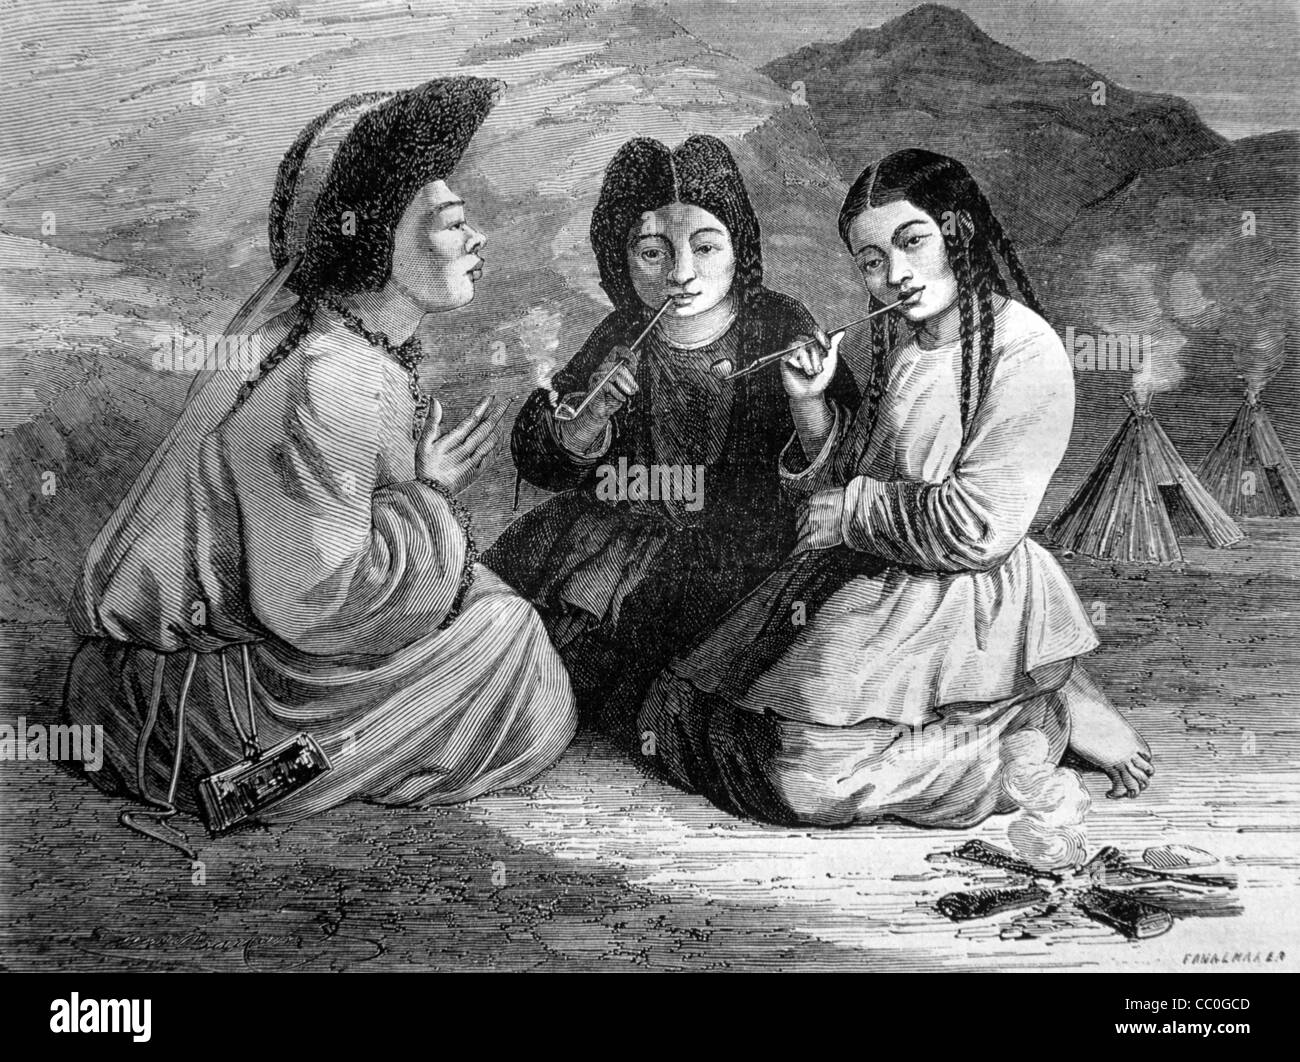 Famiglia nomade Mongol, Nomads o Mongol Smoking Pipes, Mongolia, 1868 Ingraving o Vintage Illustration Foto Stock